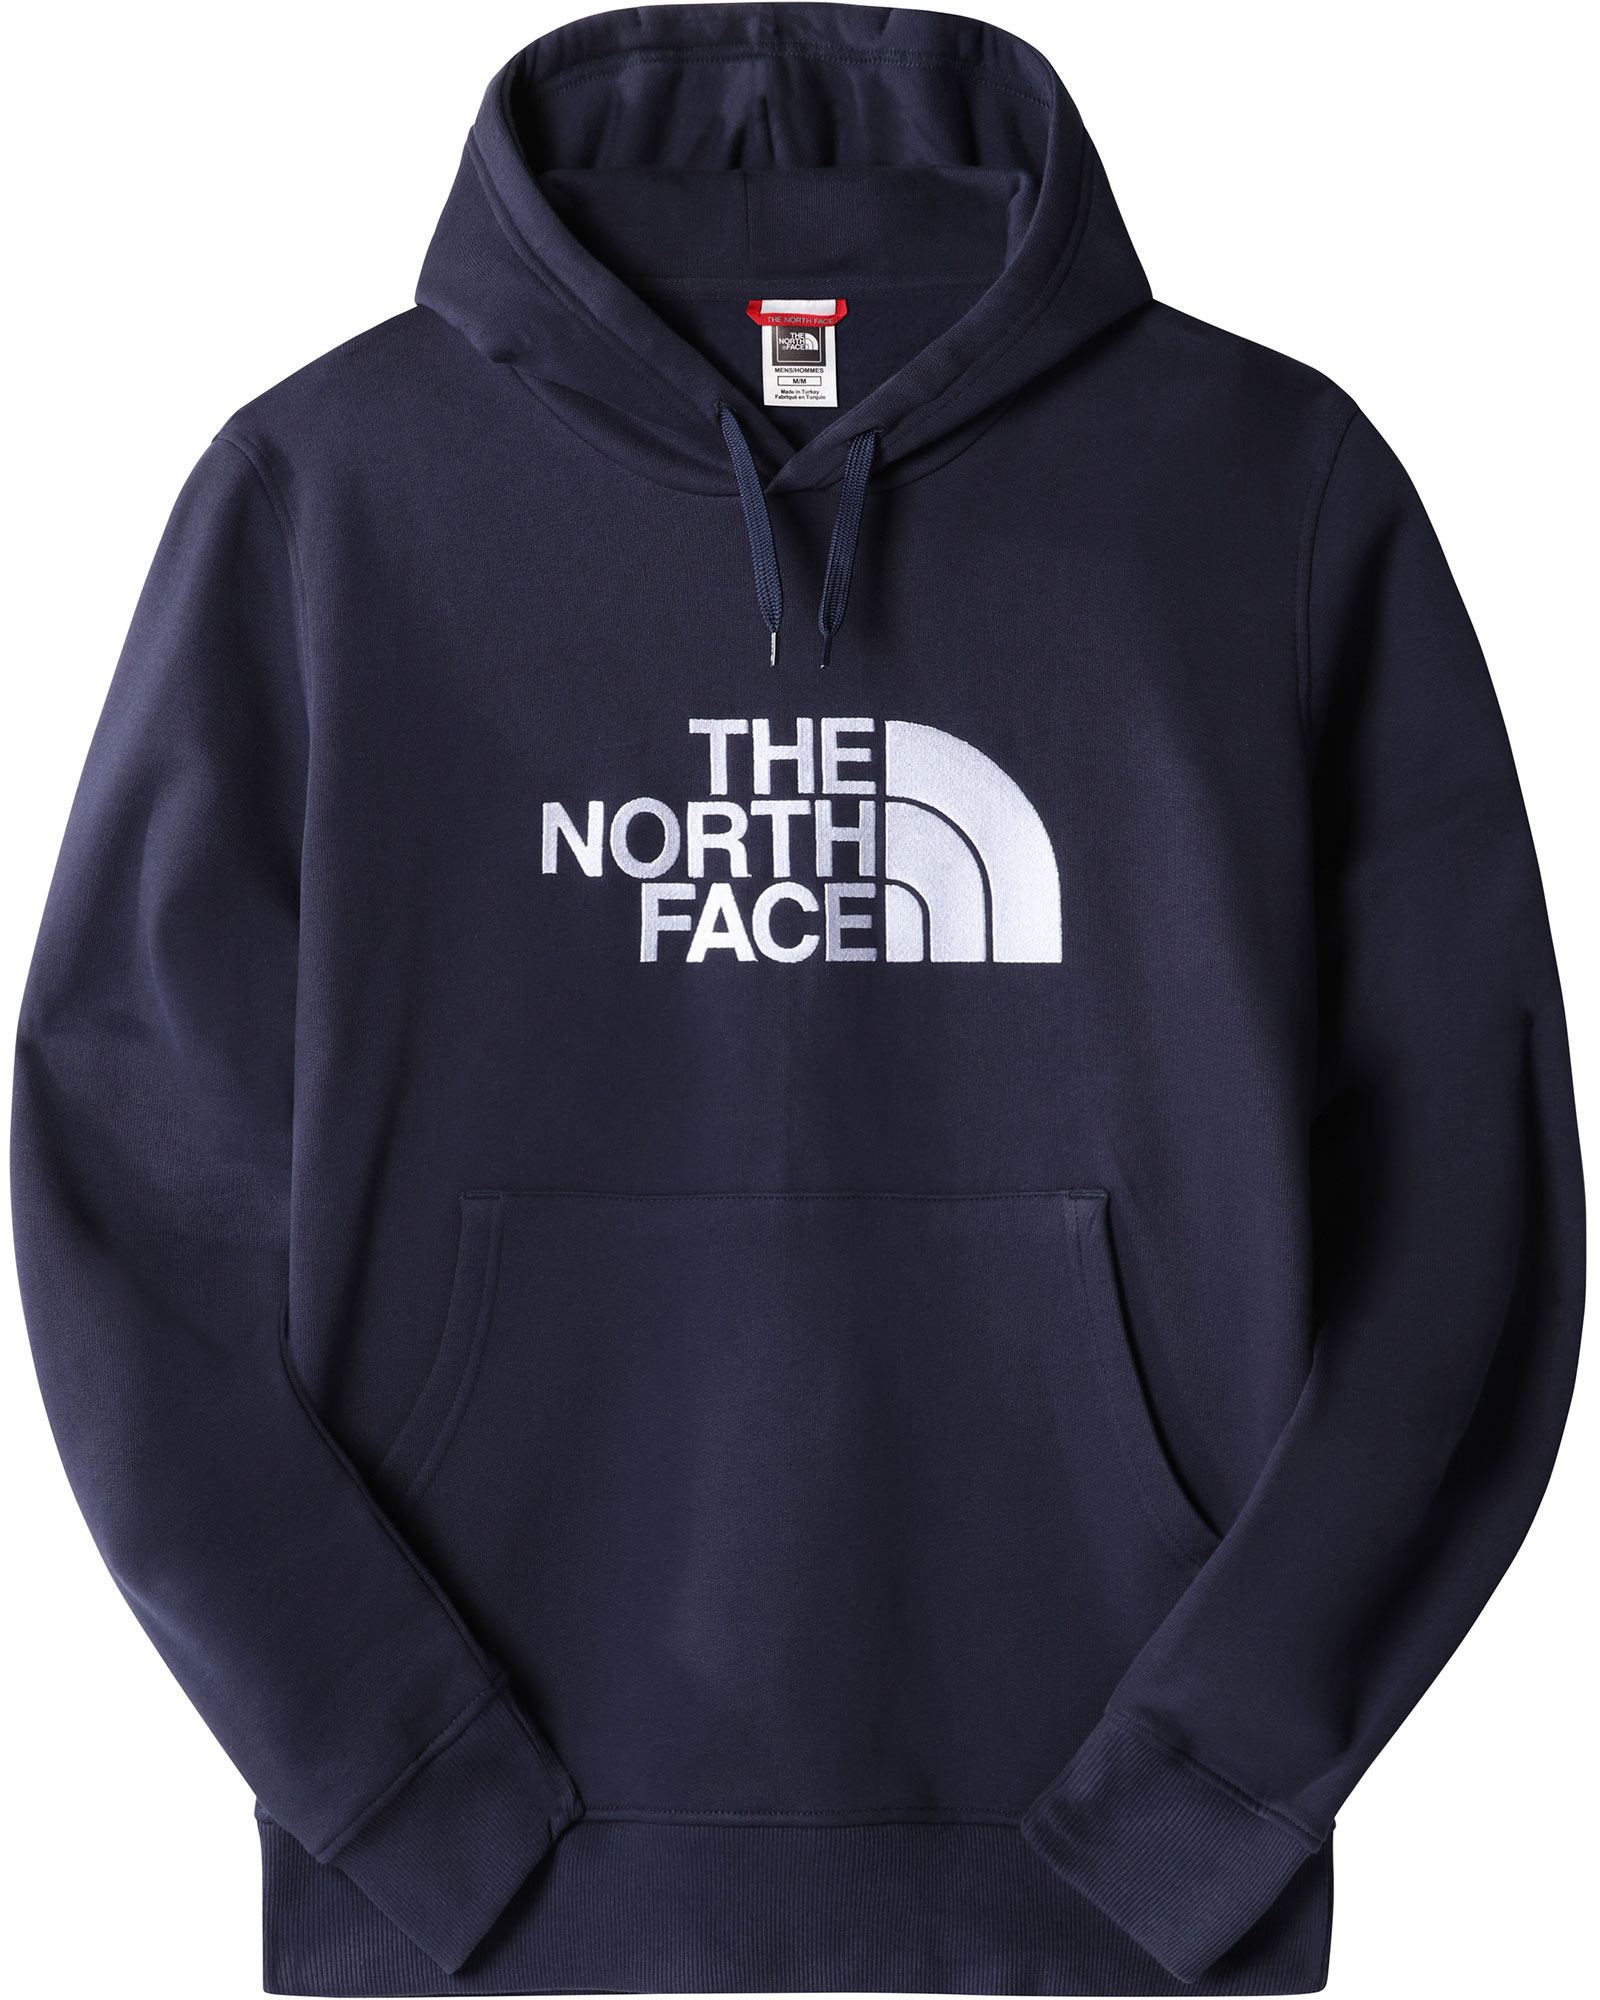 The North Face Drew Peak Men’s Hoodie - Summit Navy XL